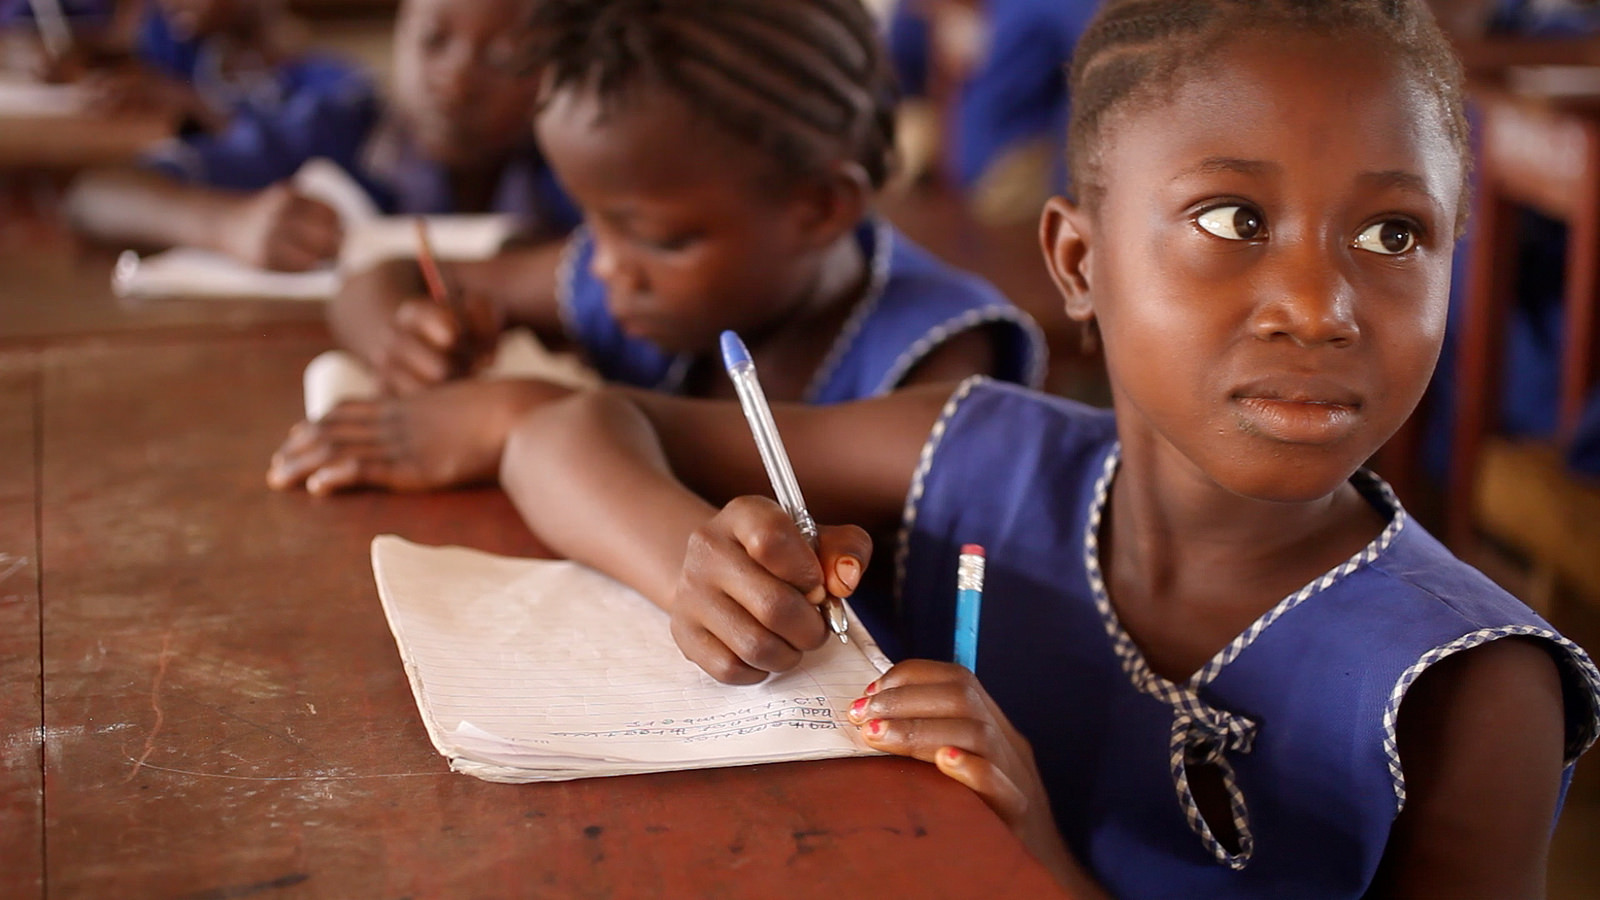 Girl writing in a school in Sierra Leone (GPE/Stephan Bachenheimer CC BY-NC-ND 2.0)